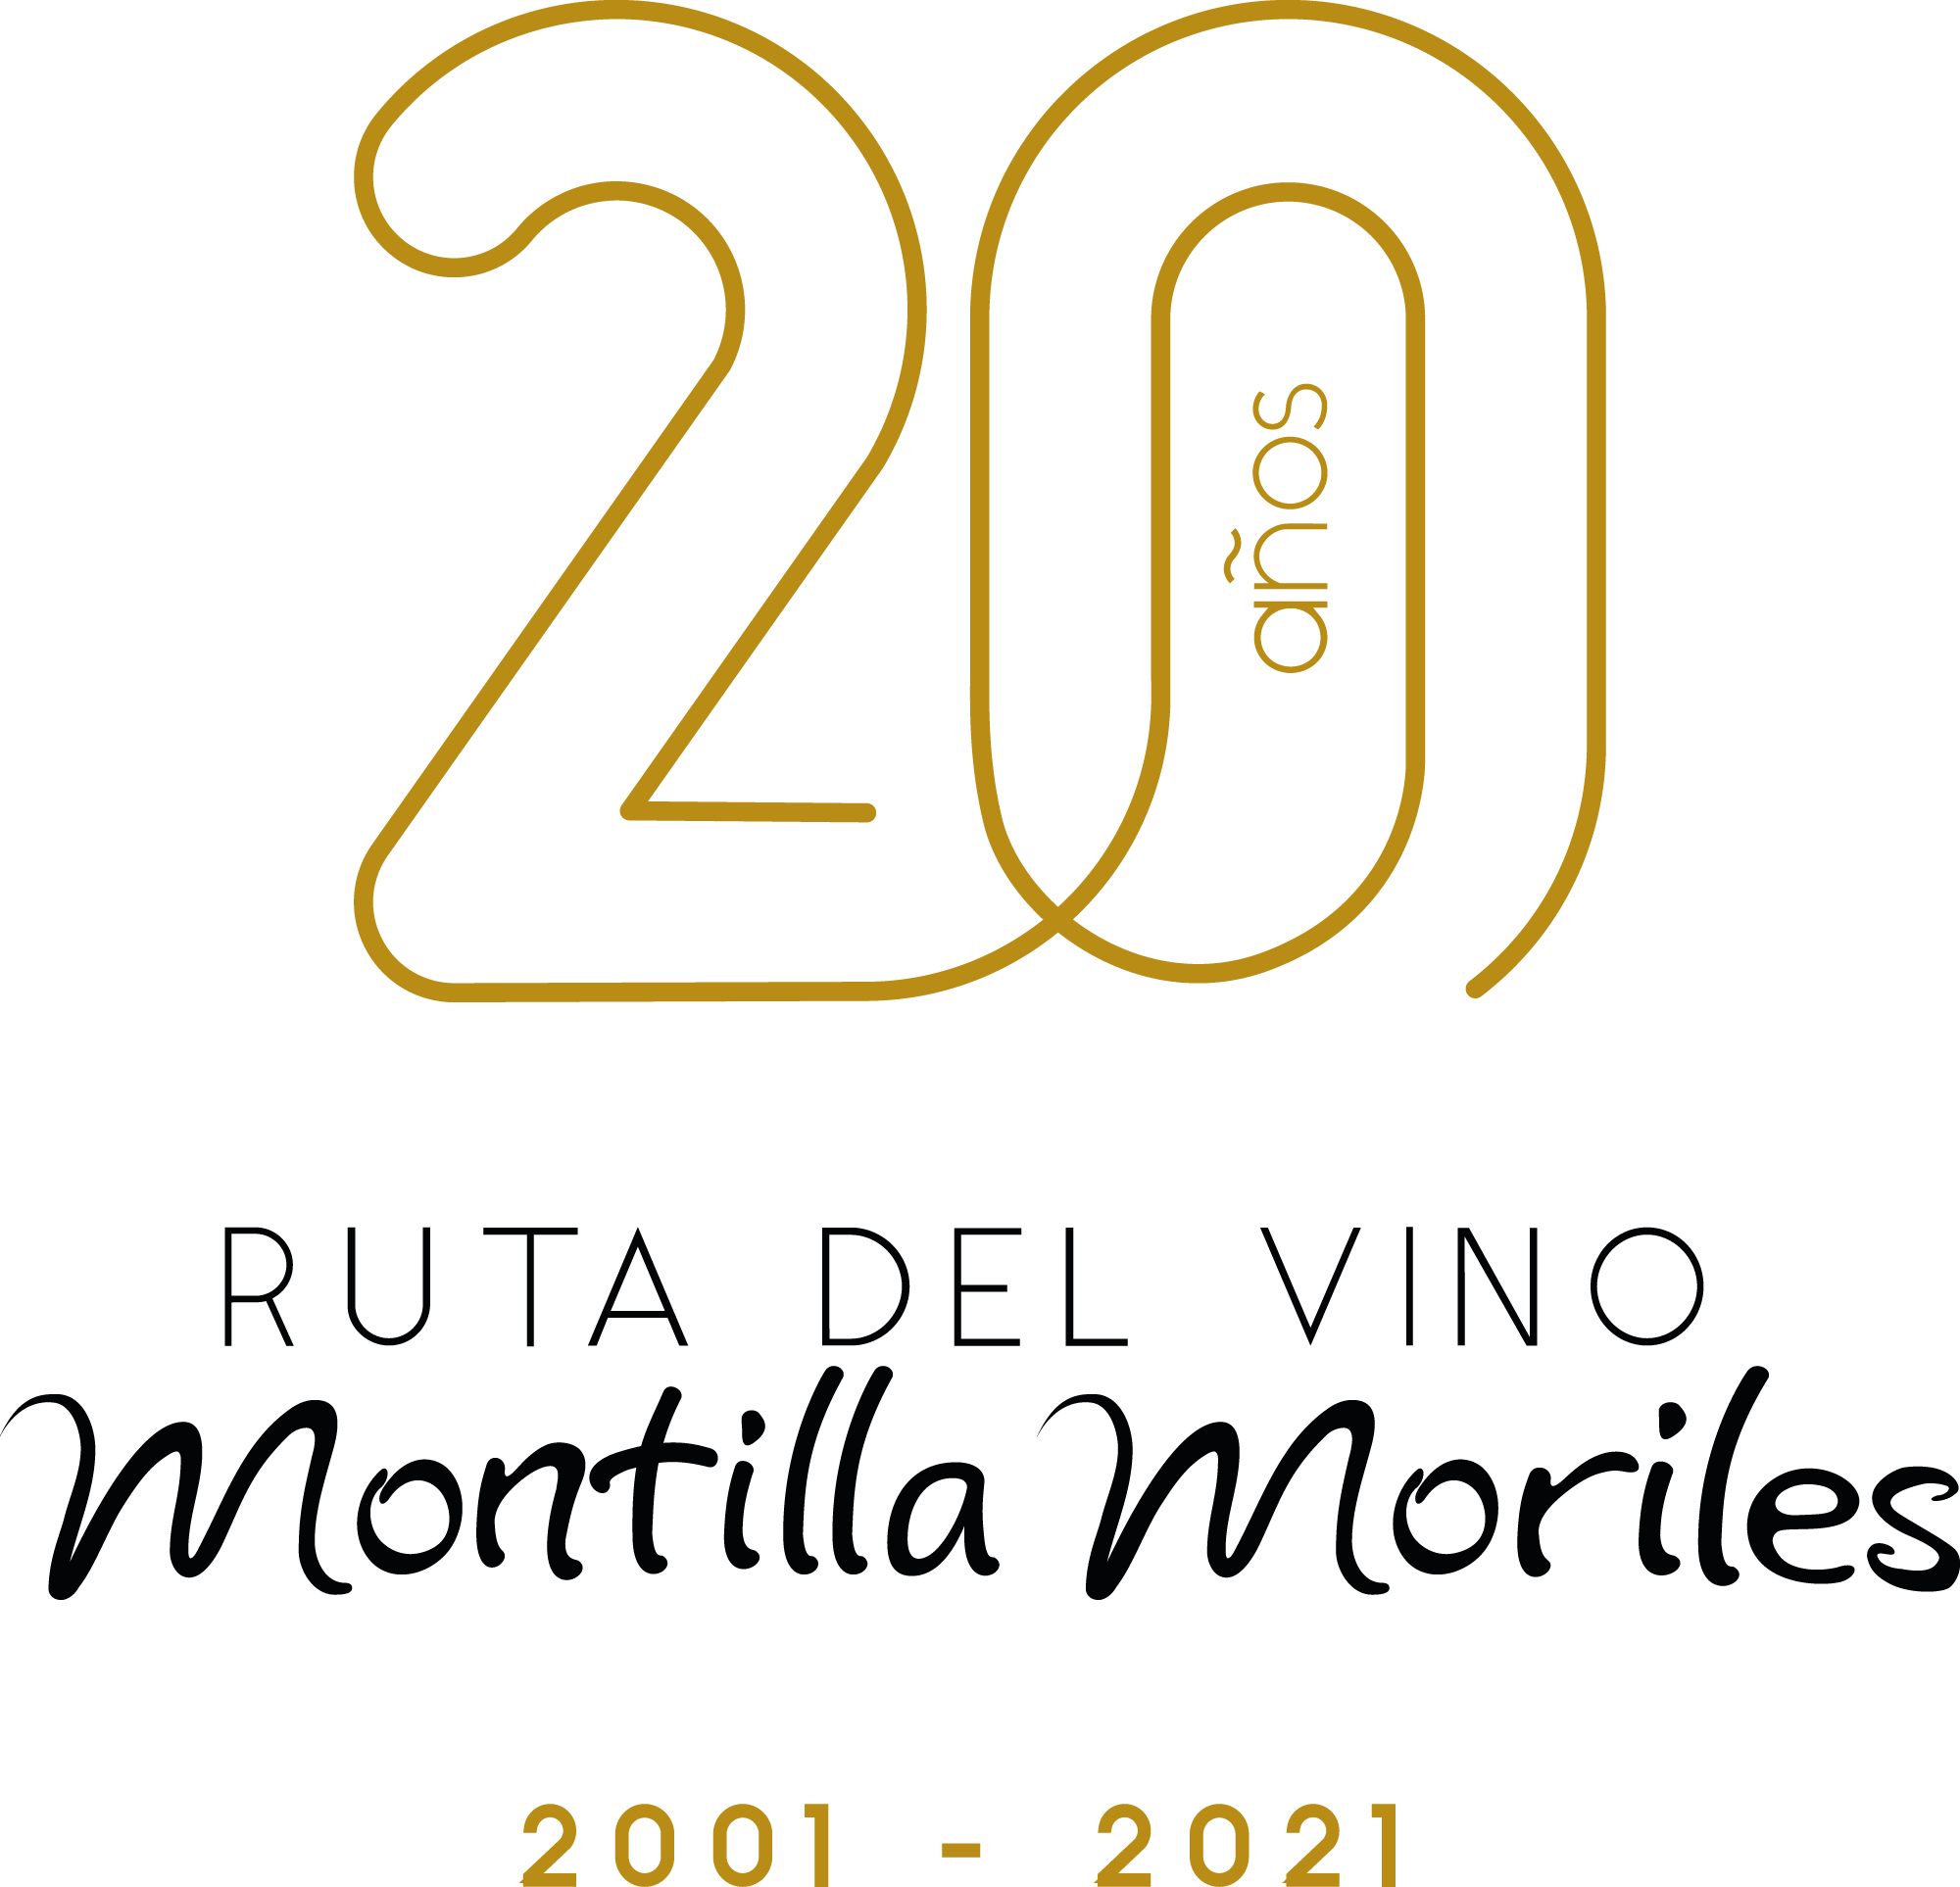 La Ruta del Vino Montilla-Moriles